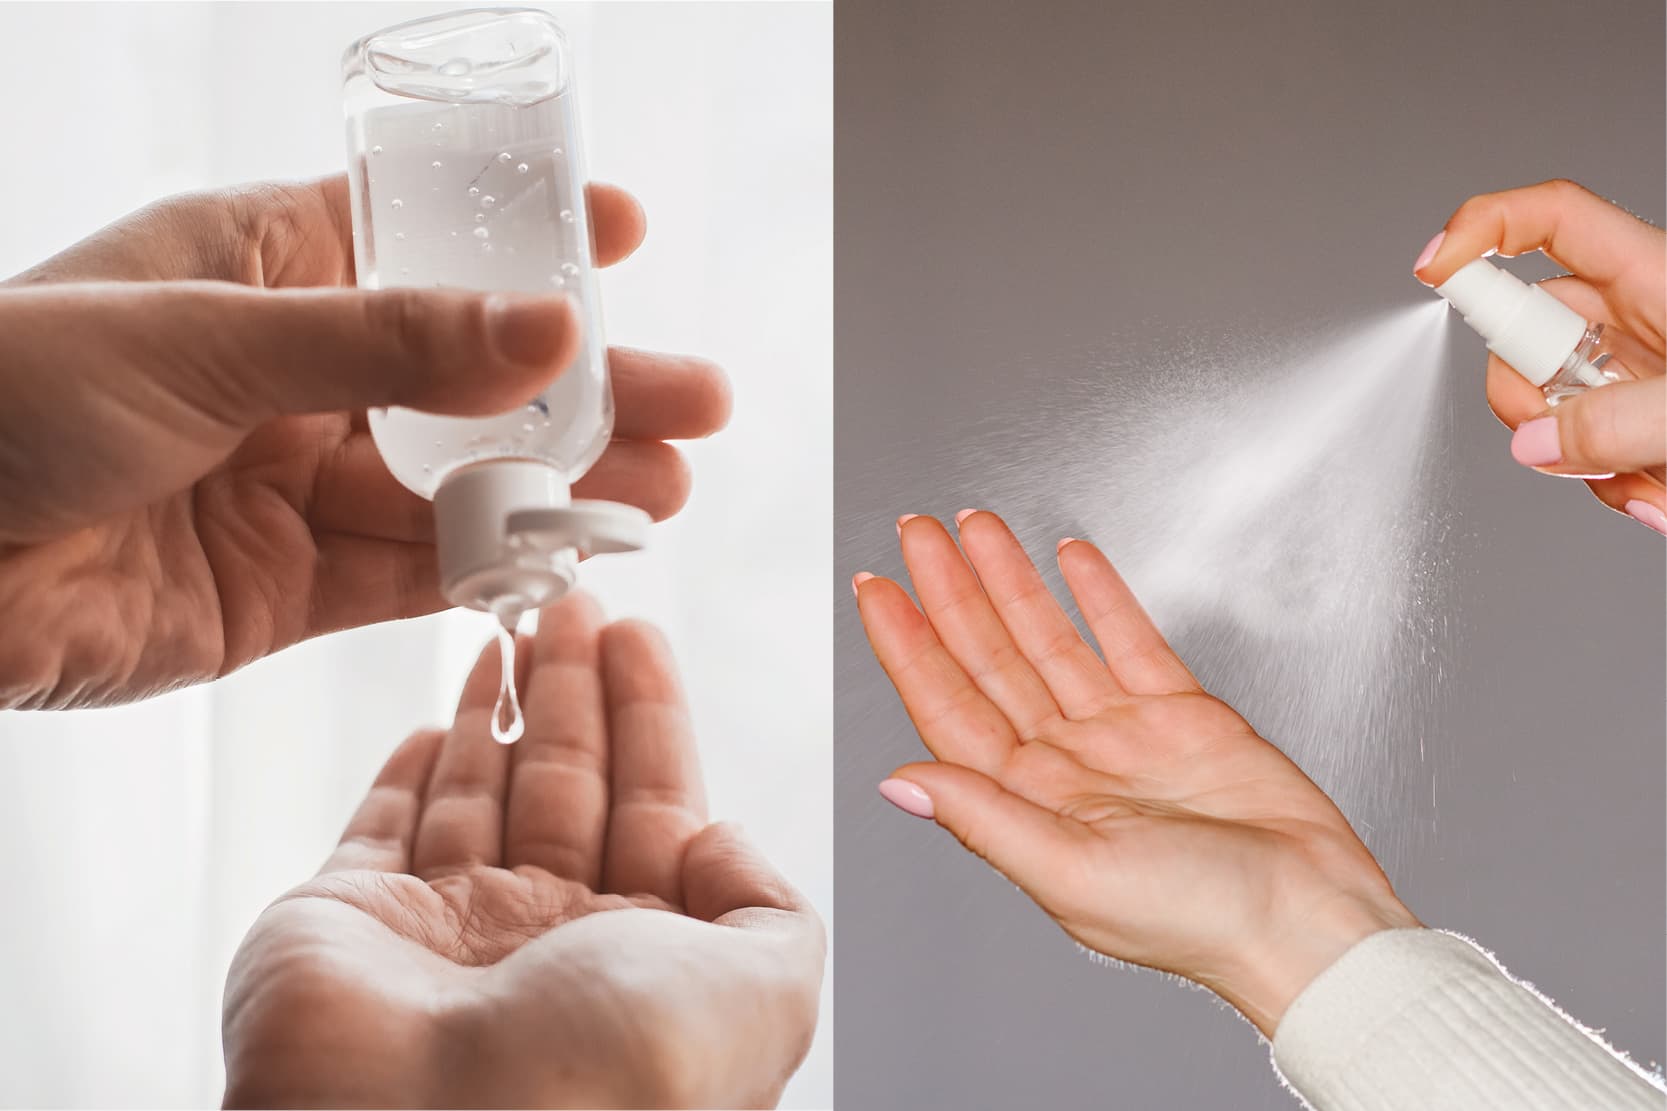 Anti-microbial hand hygiene